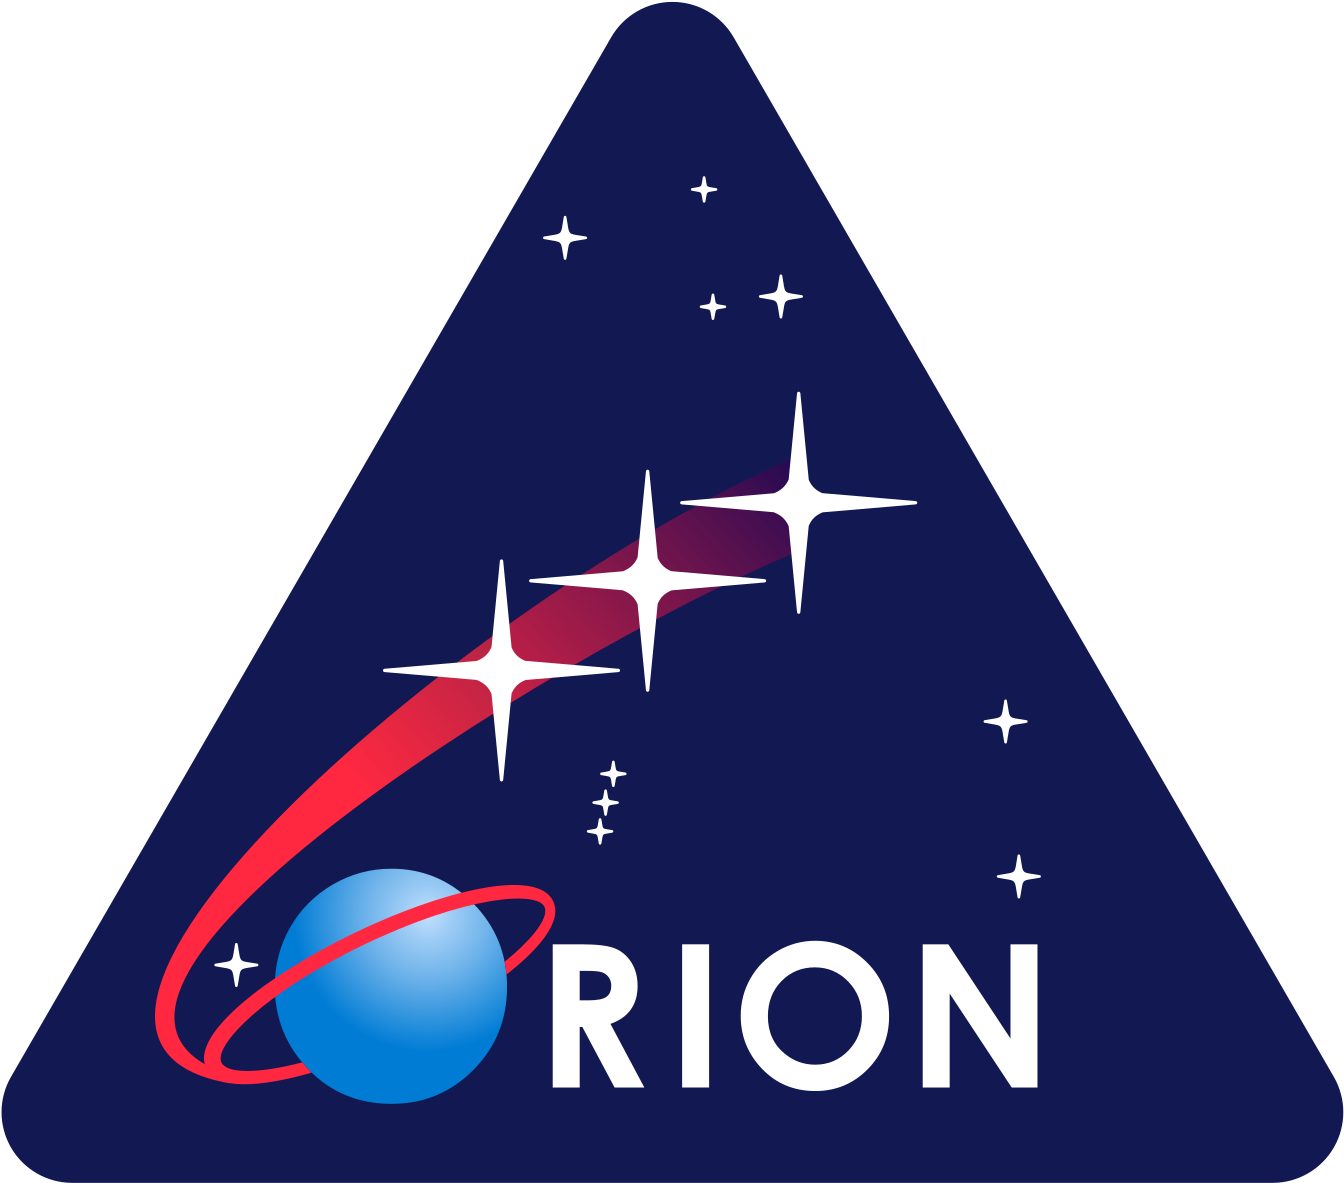 Orion Triangle Patch - Nasa Orion Logo (1360x1200)